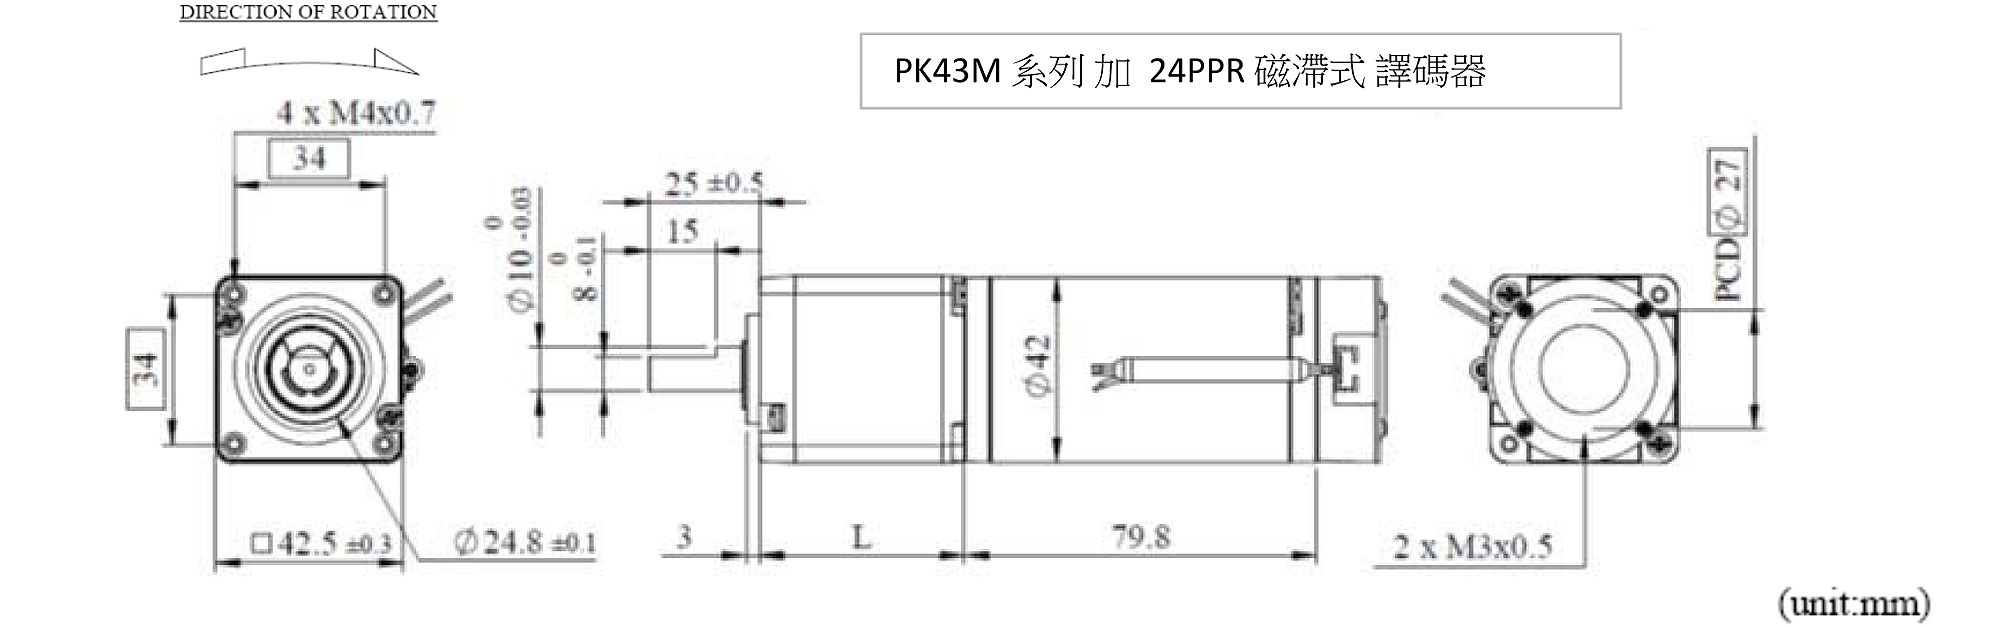 PK43MDE 外観寸法